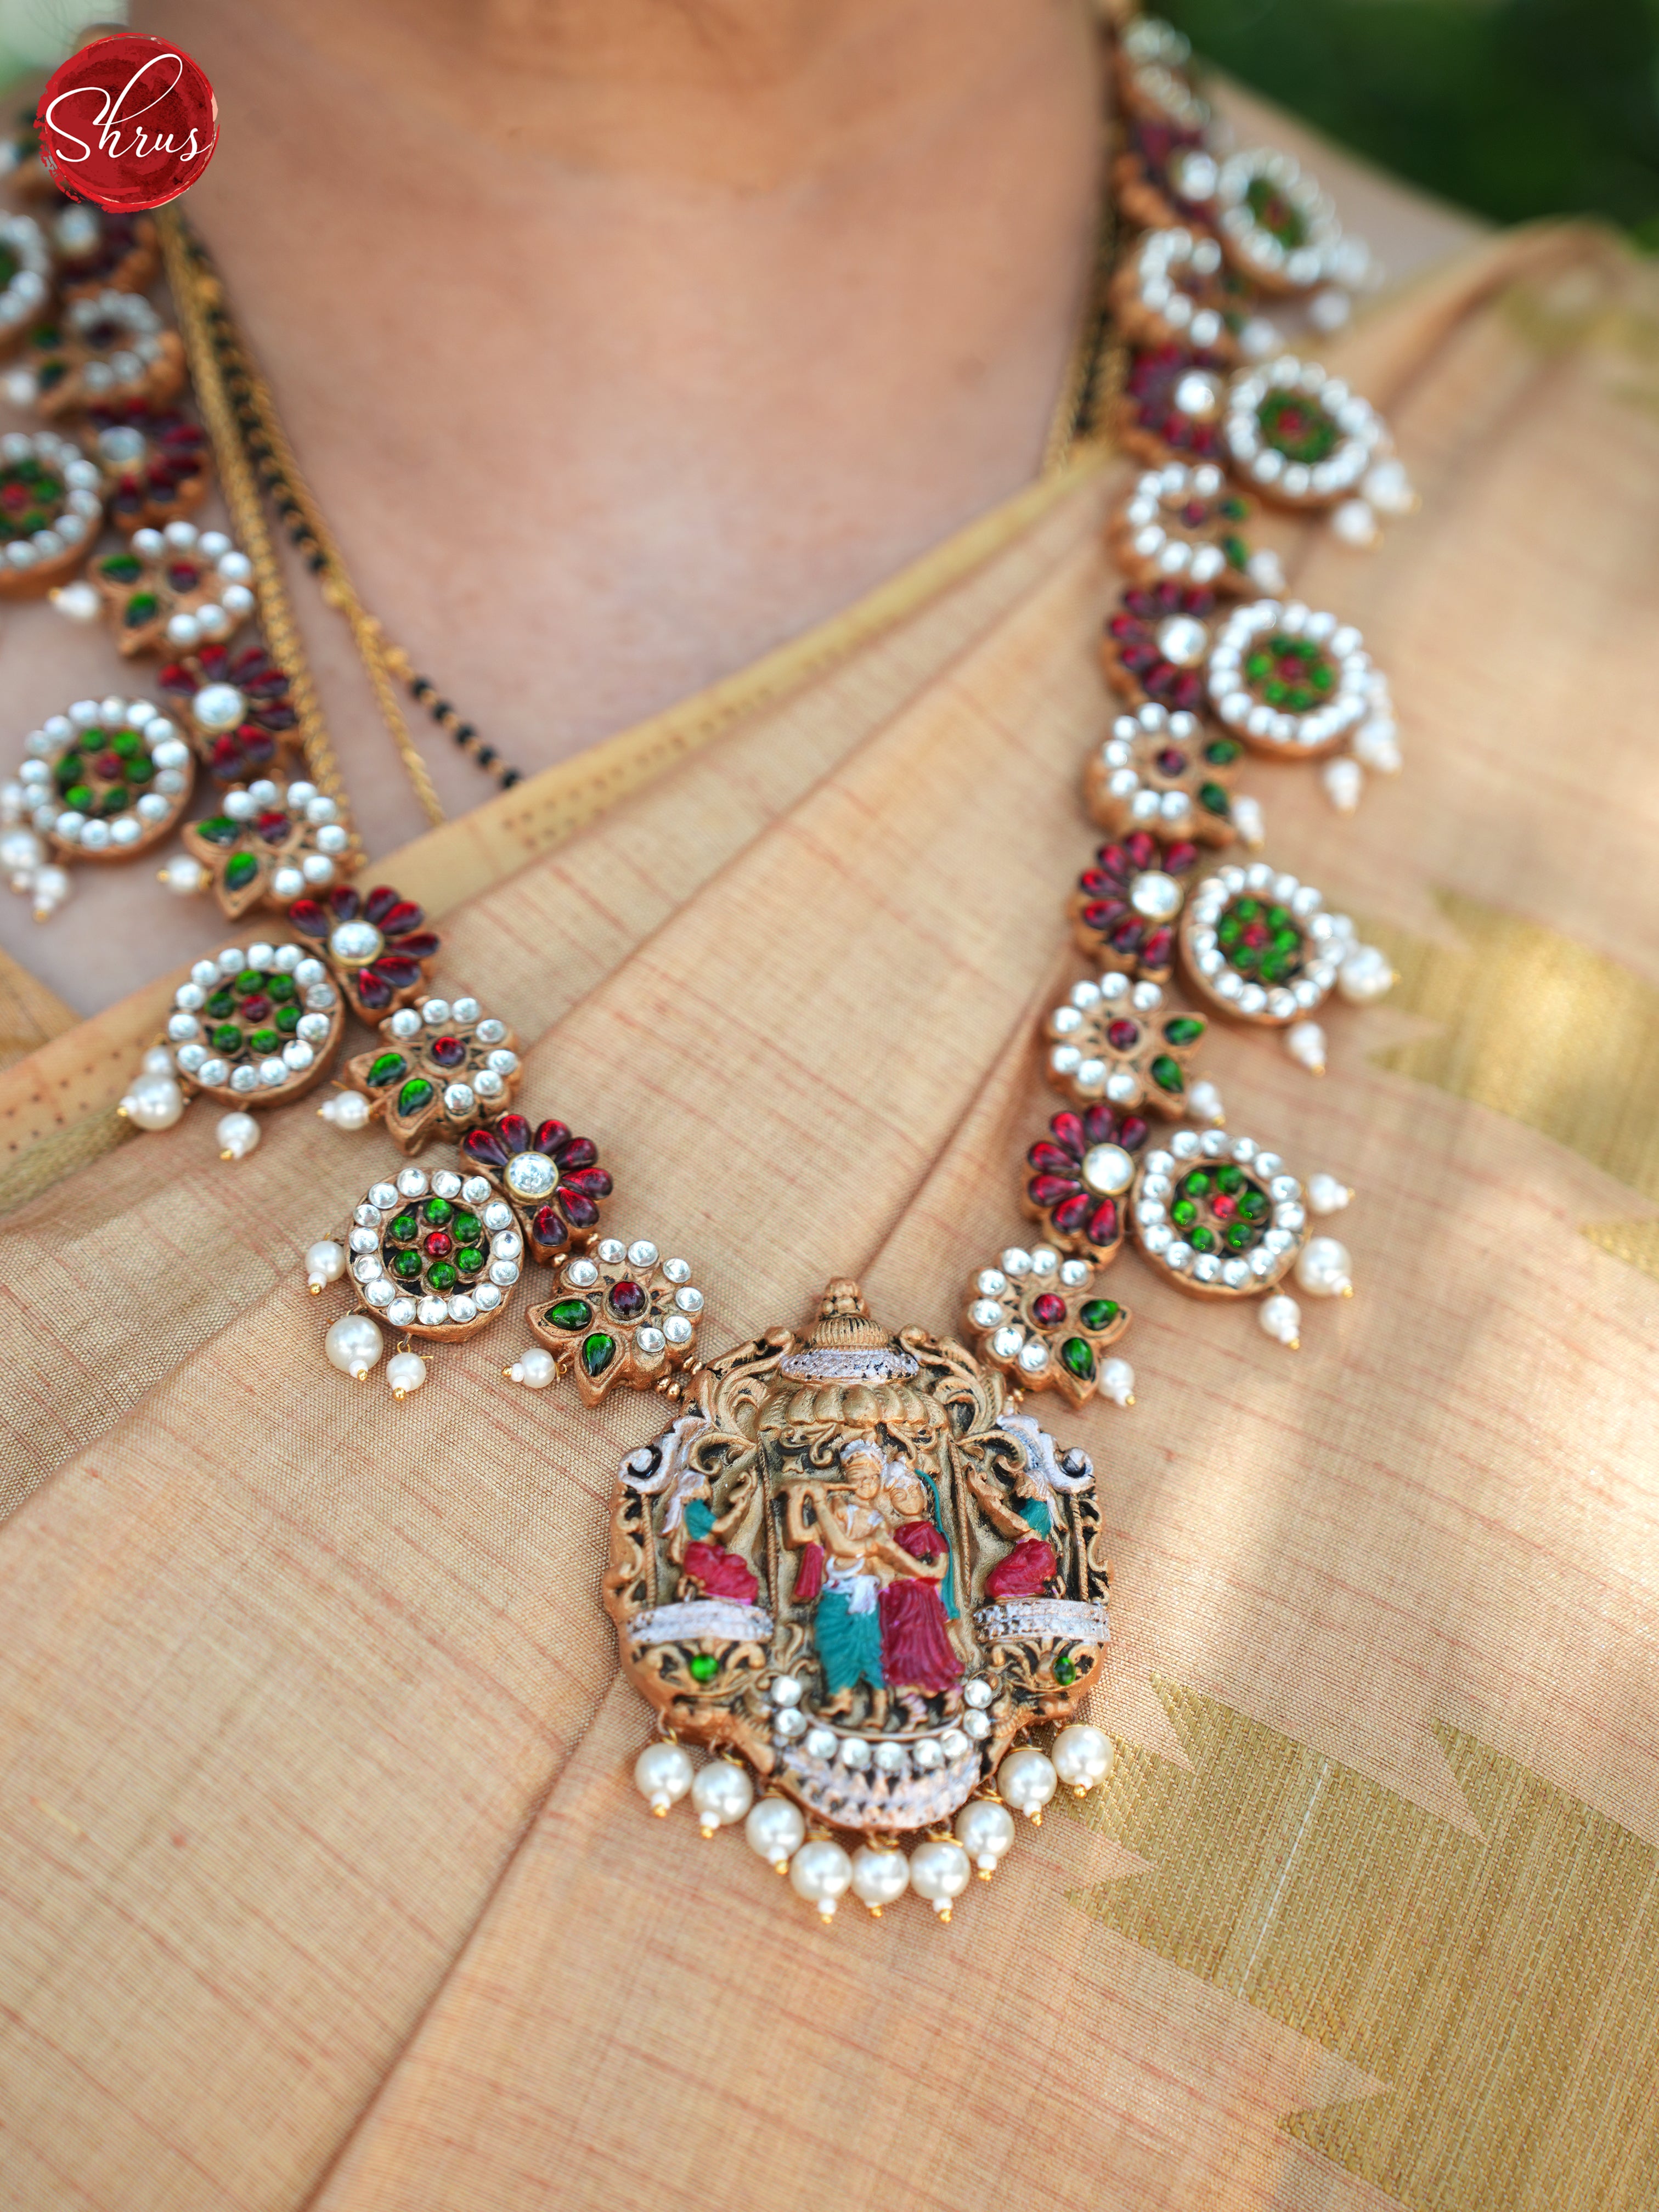 Radha Krishna Pendant , floral chain Terracotta neckpiece With Jhumkas - Neck Piece & Earrings - Shop on ShrusEternity.com